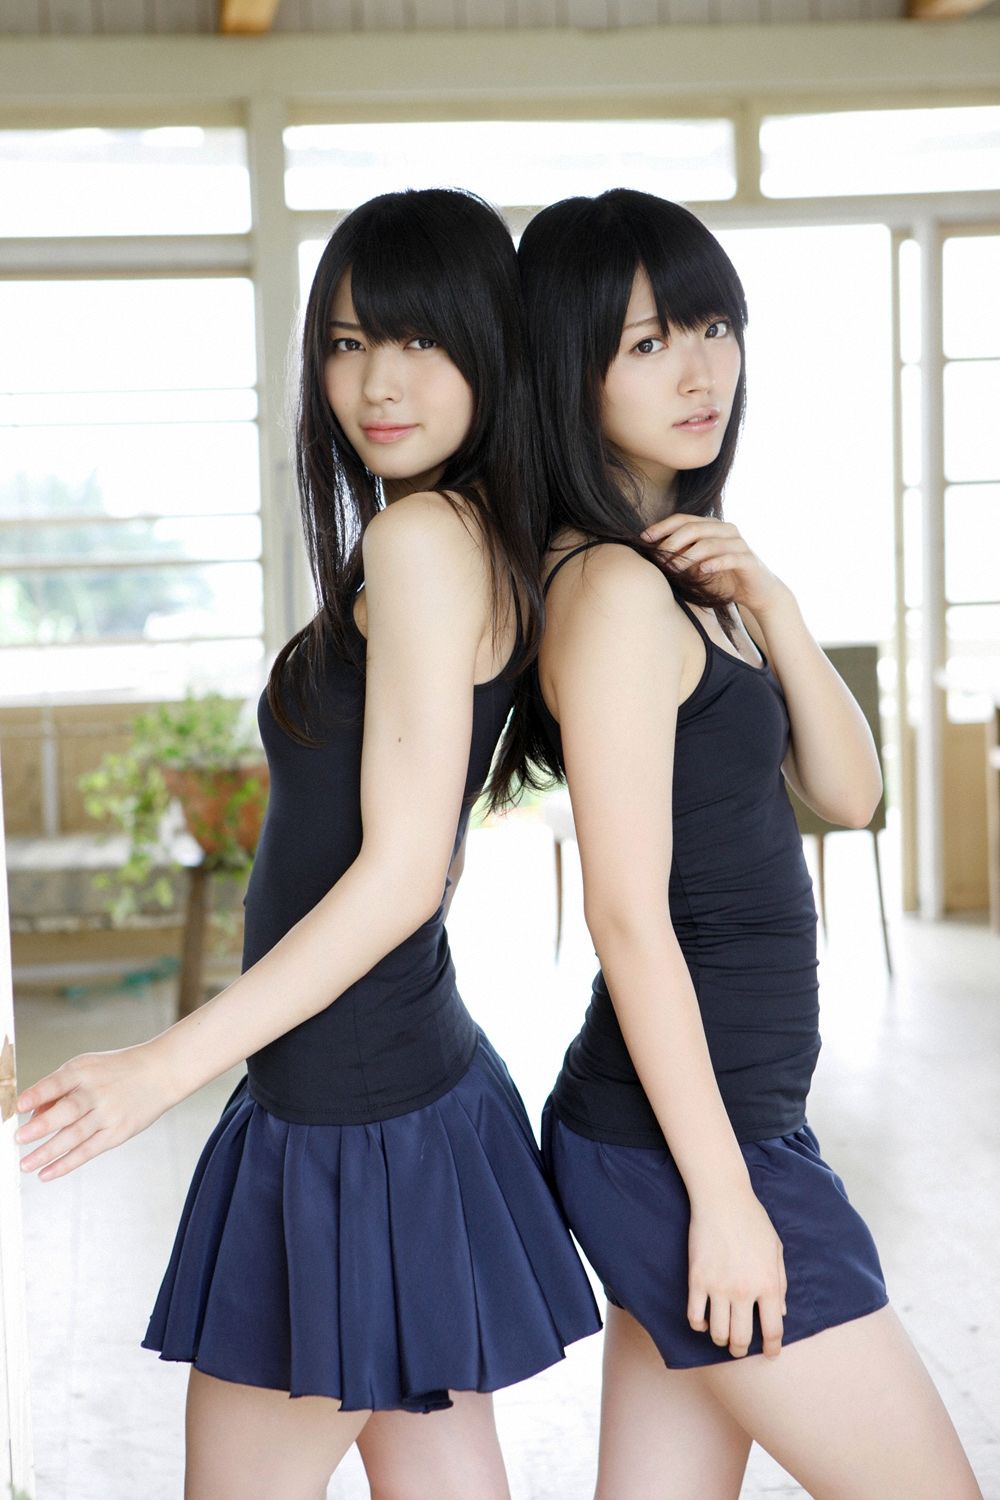 Japanese girl lesbian. Airi Suzuki and Maimi Yajima. Азиатские близняшки. Азиатские Близнецы. Японские сладкие девочки.